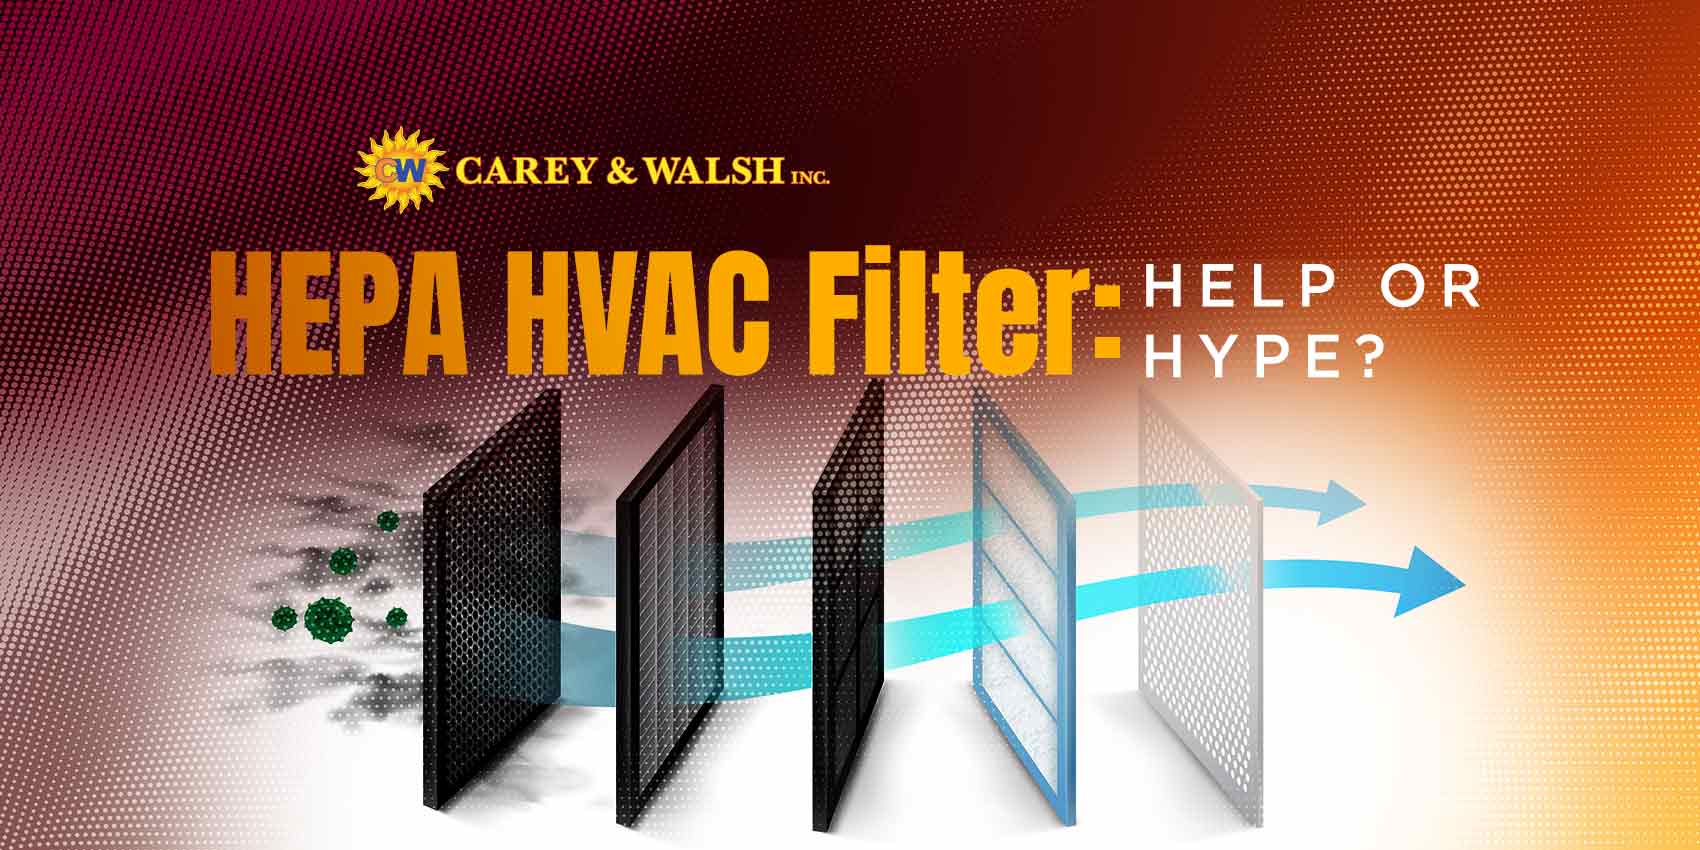 HEPA HVAC Filter: Help or Hype?